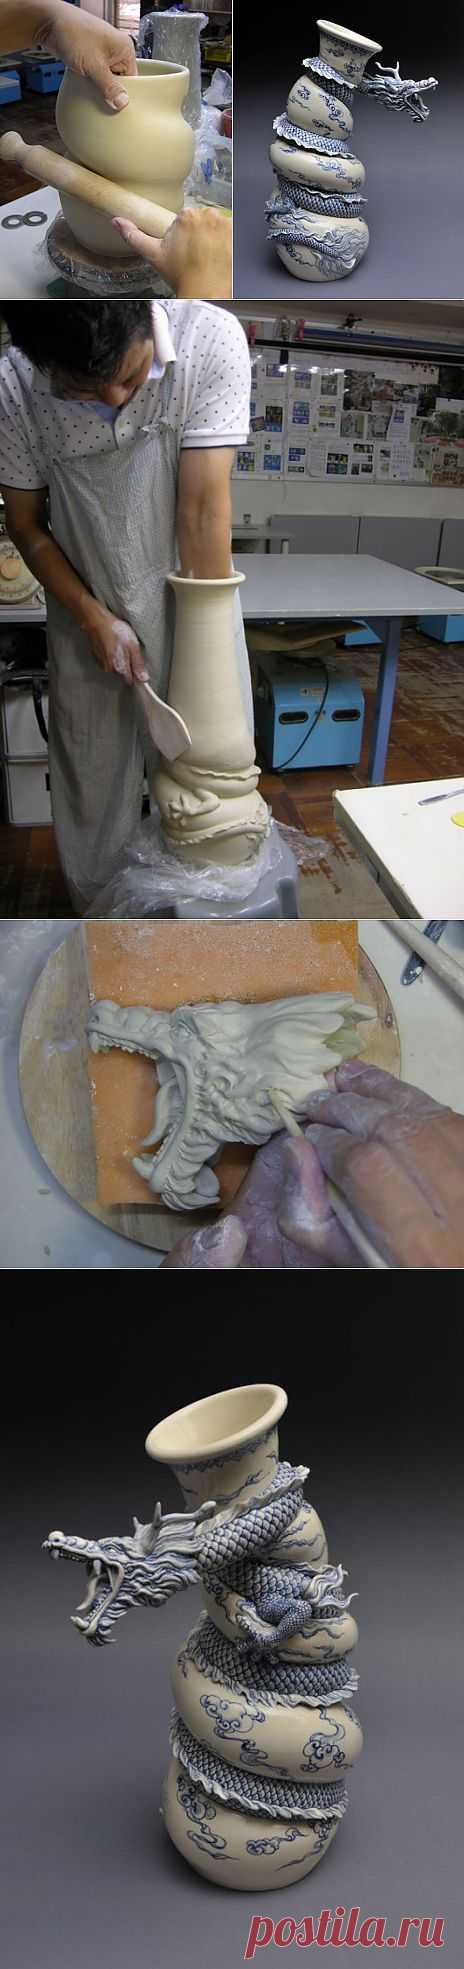 Как рождаются фарфоровые драконы: мастеркласс скульптора Johnson Tsang | Скульптура | Арт